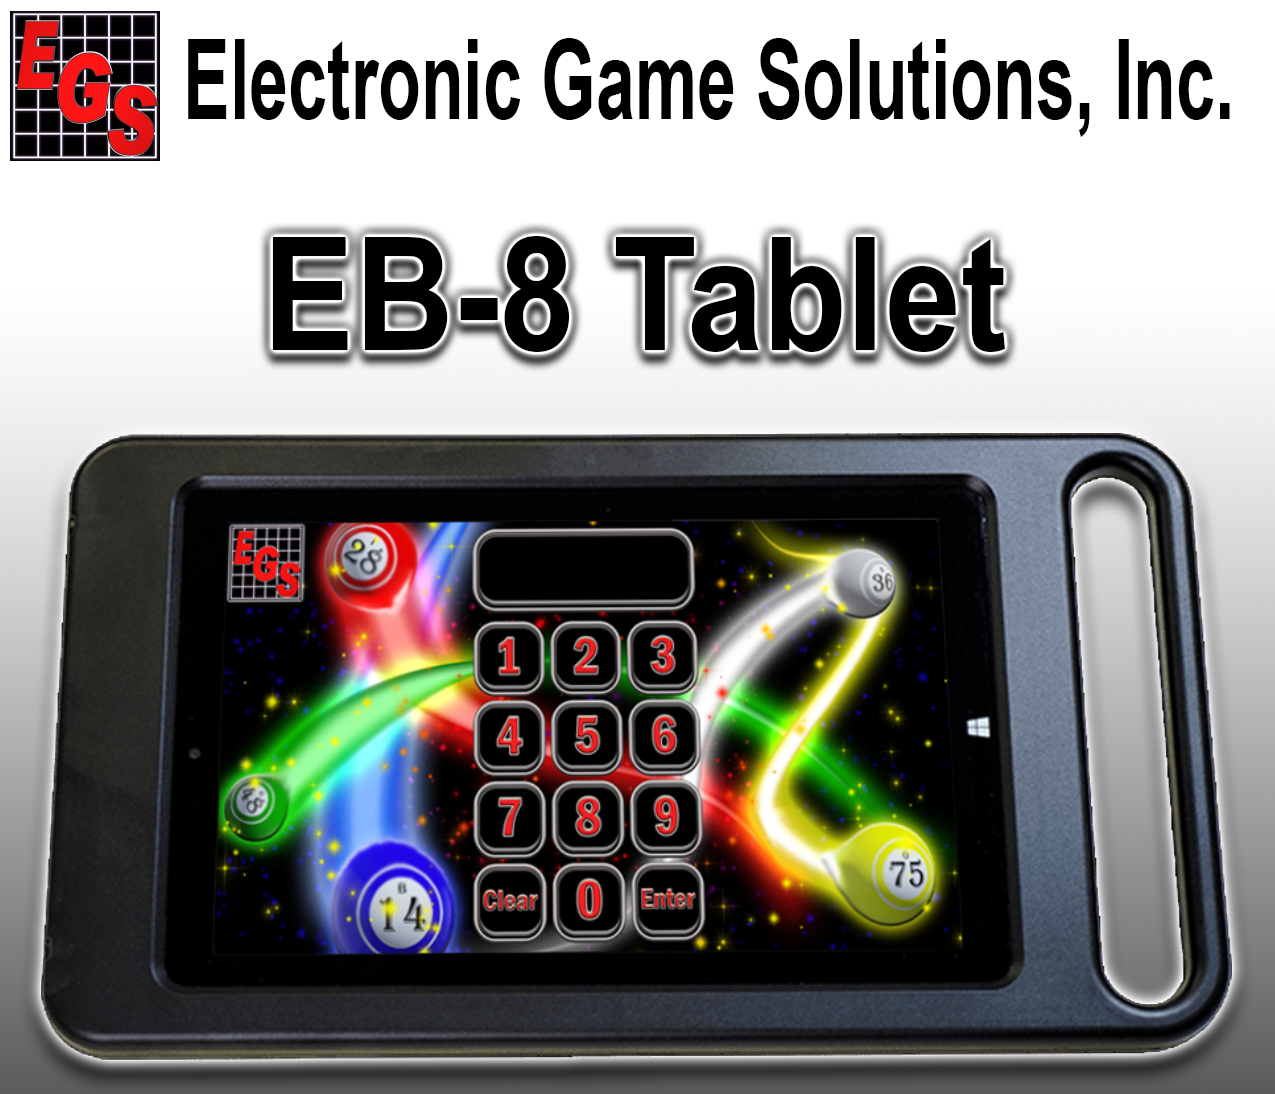 EB-8 Tablet Unit